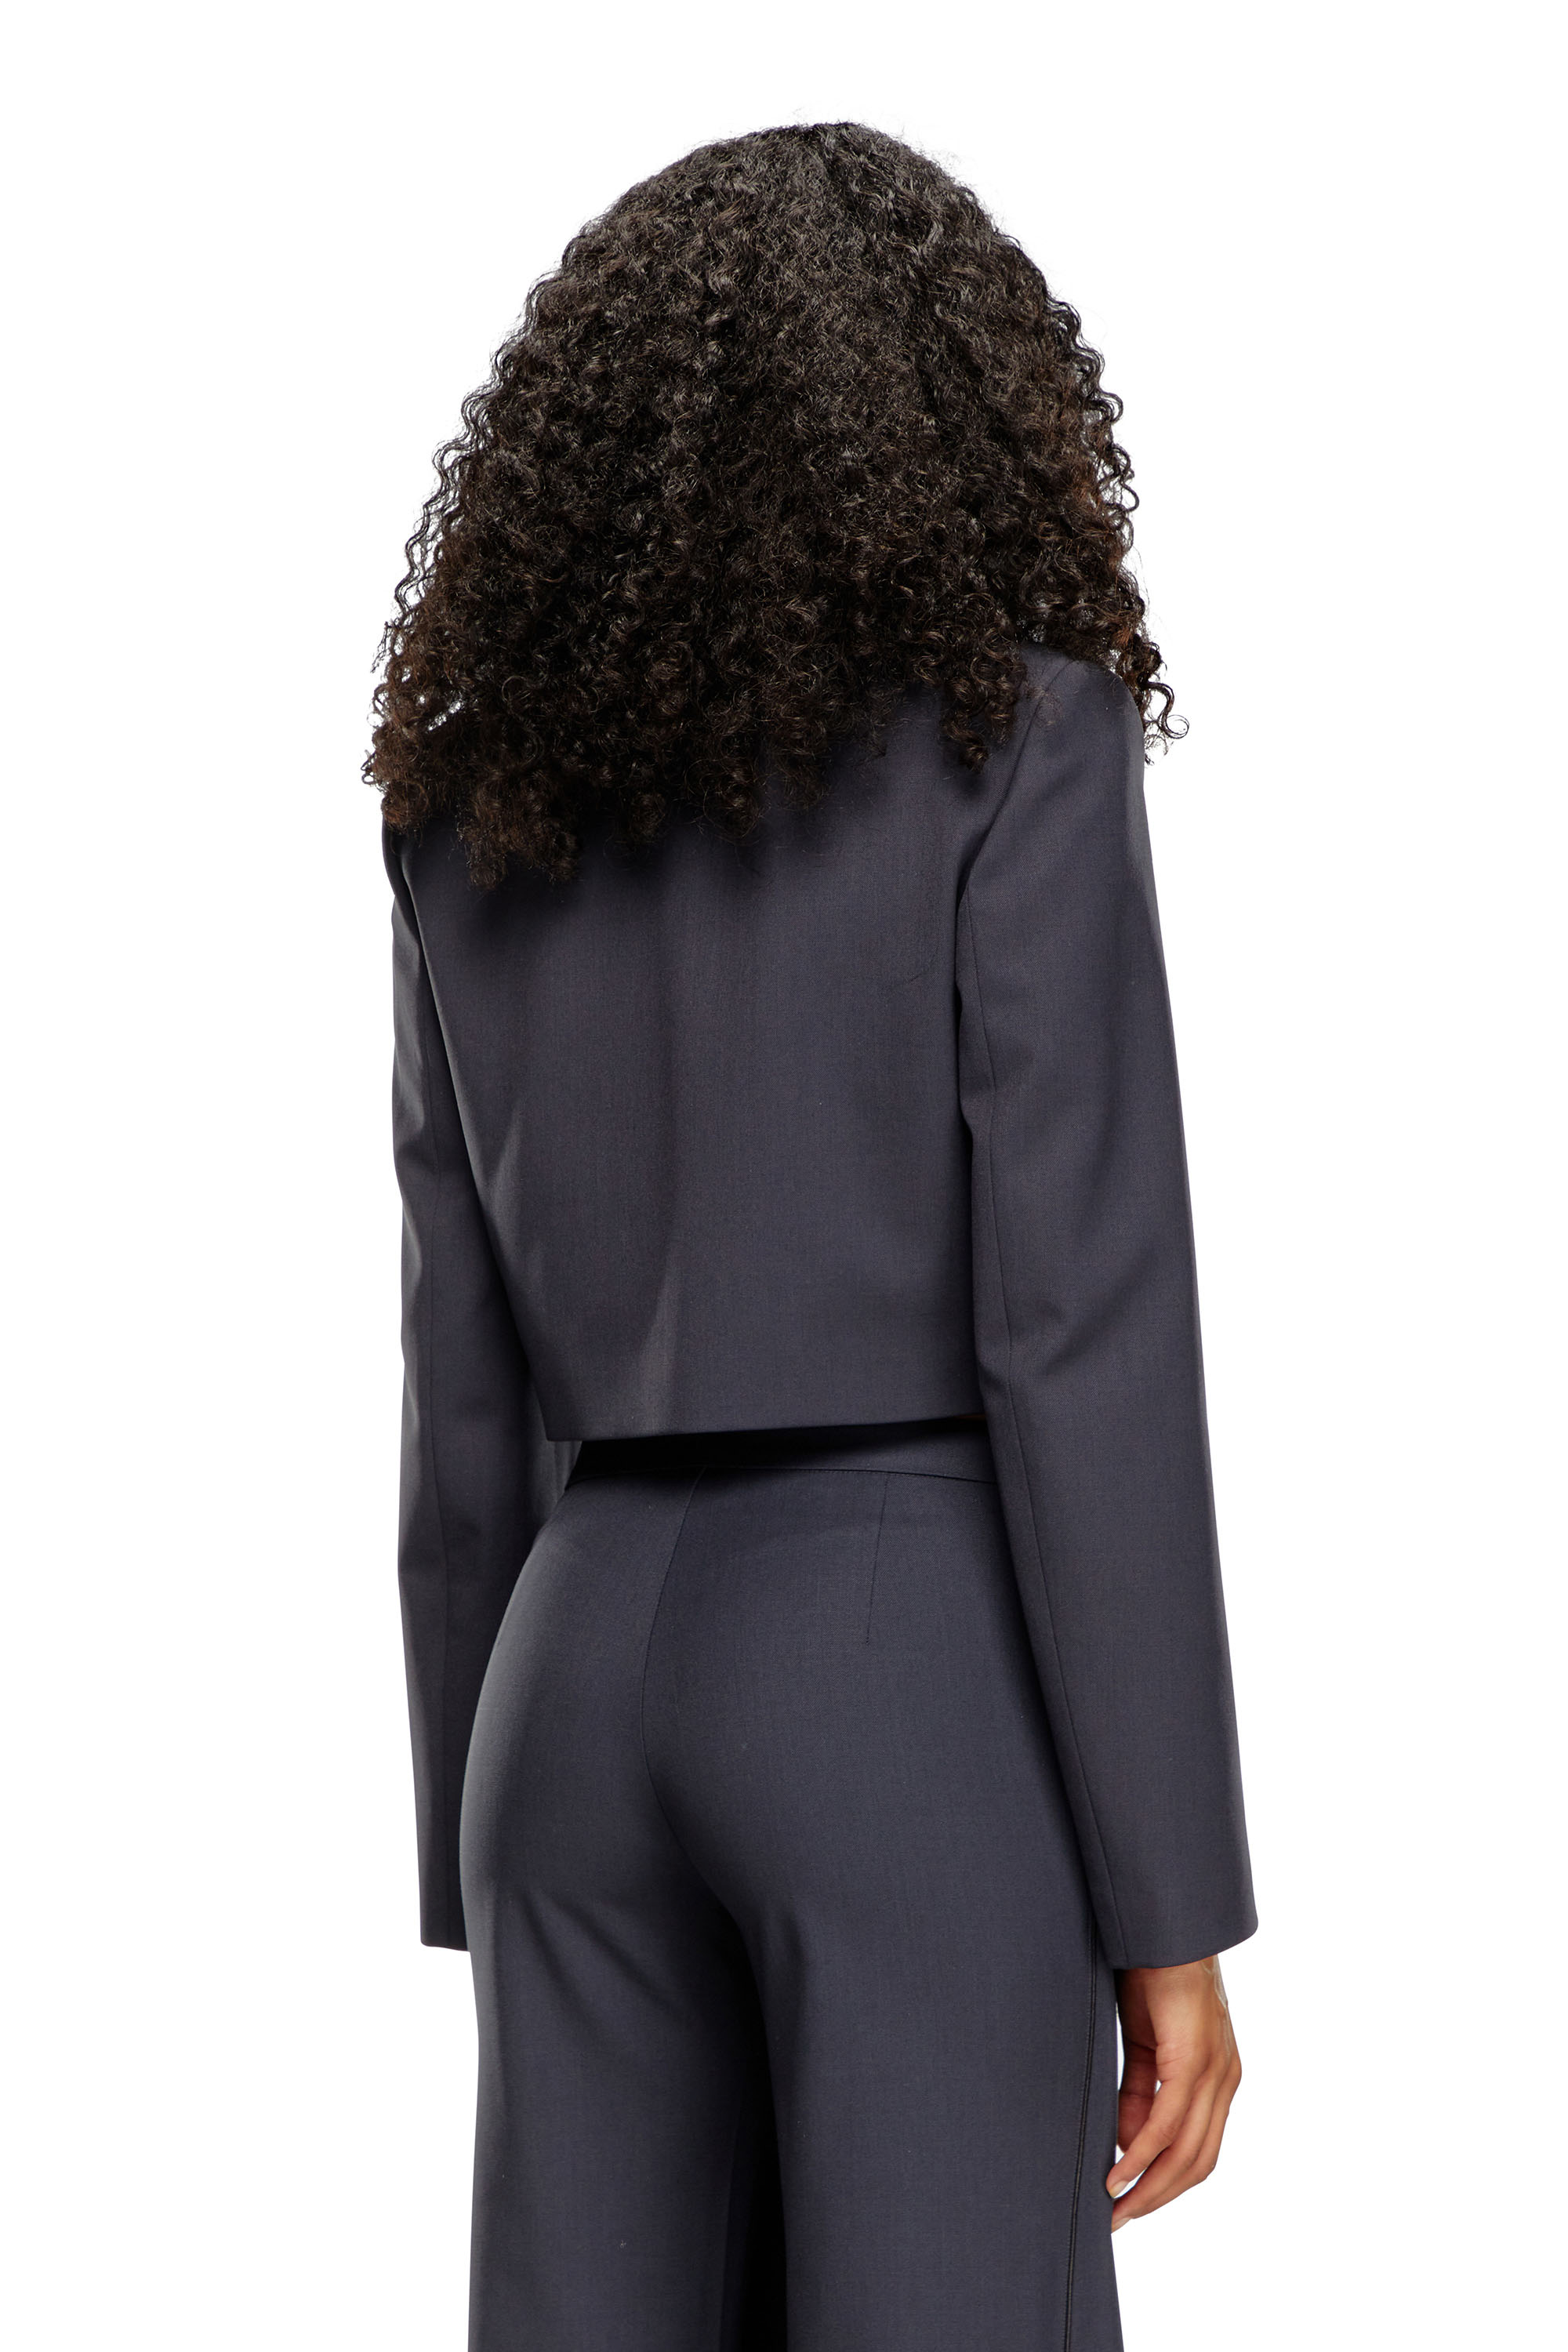 Diesel - G-MILLA-P1, Female Cropped blazer in stretch wool blend in グレー - Image 4